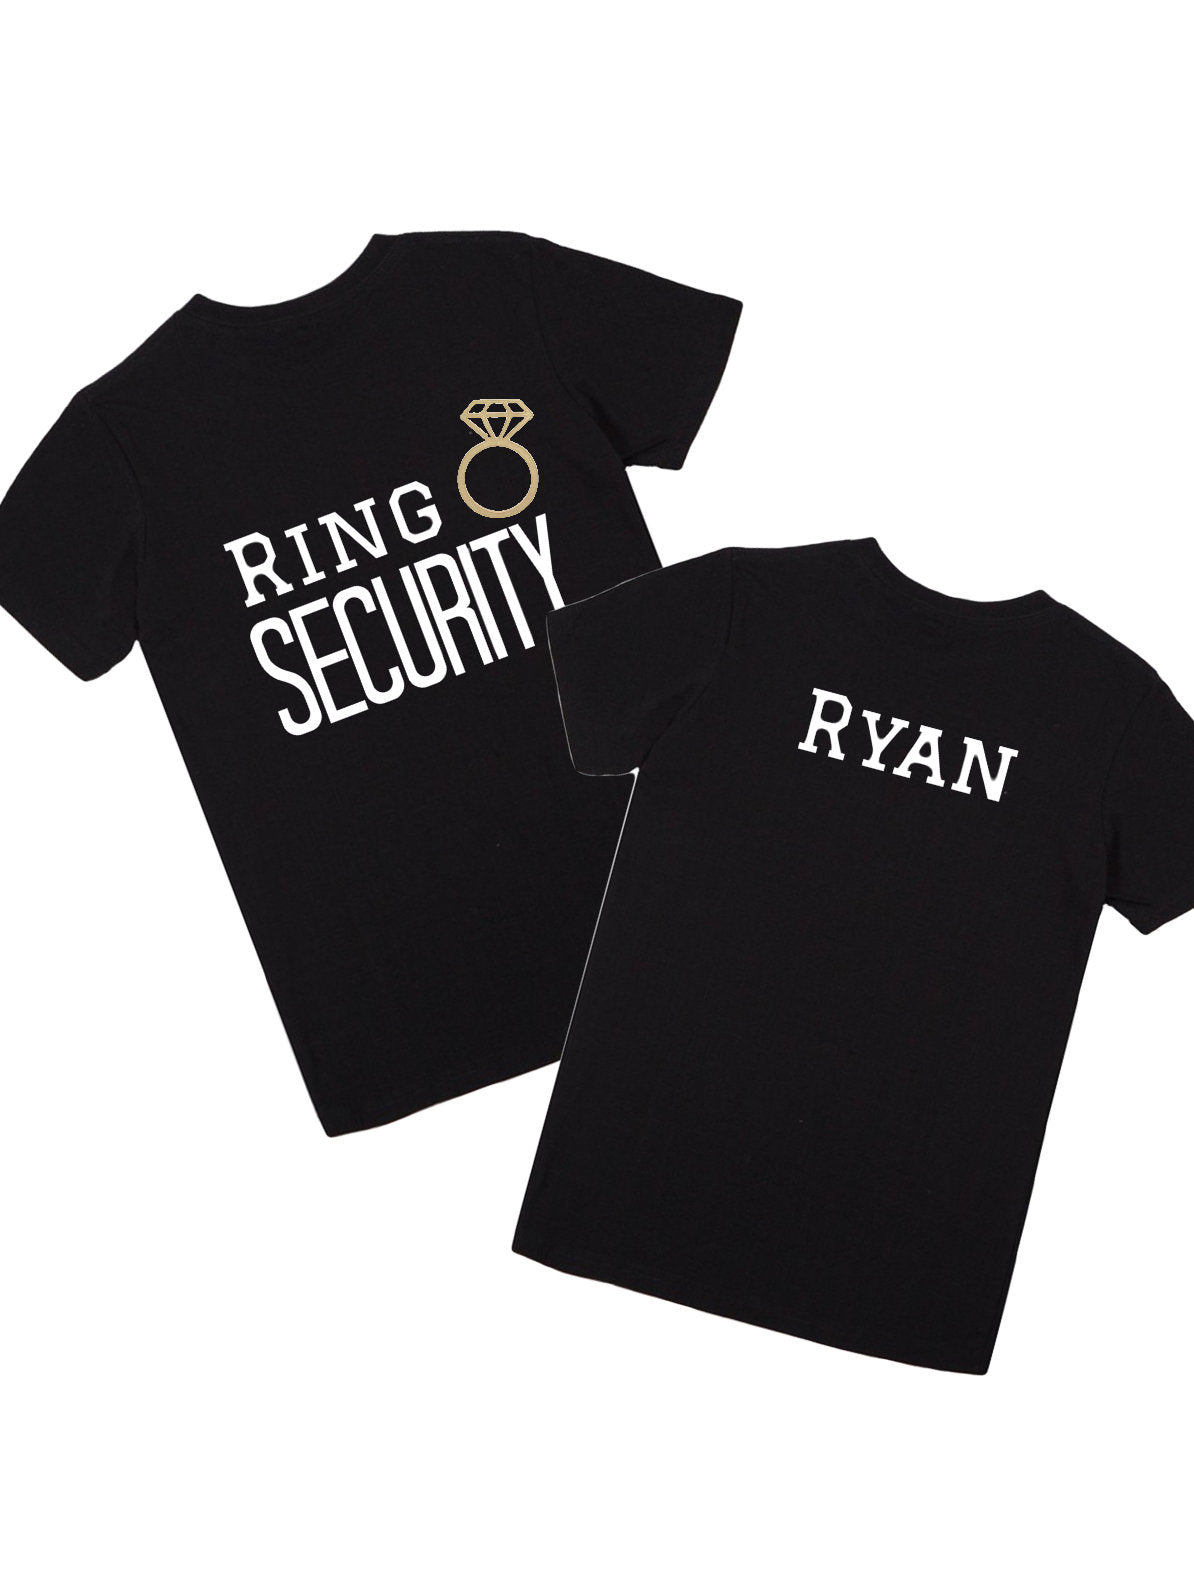 Ring security shirt| Petal Patrol shirt, ring barer shirt, ring guard shirt, wedding party gifts, miniature groom shirt, gift for ring boy